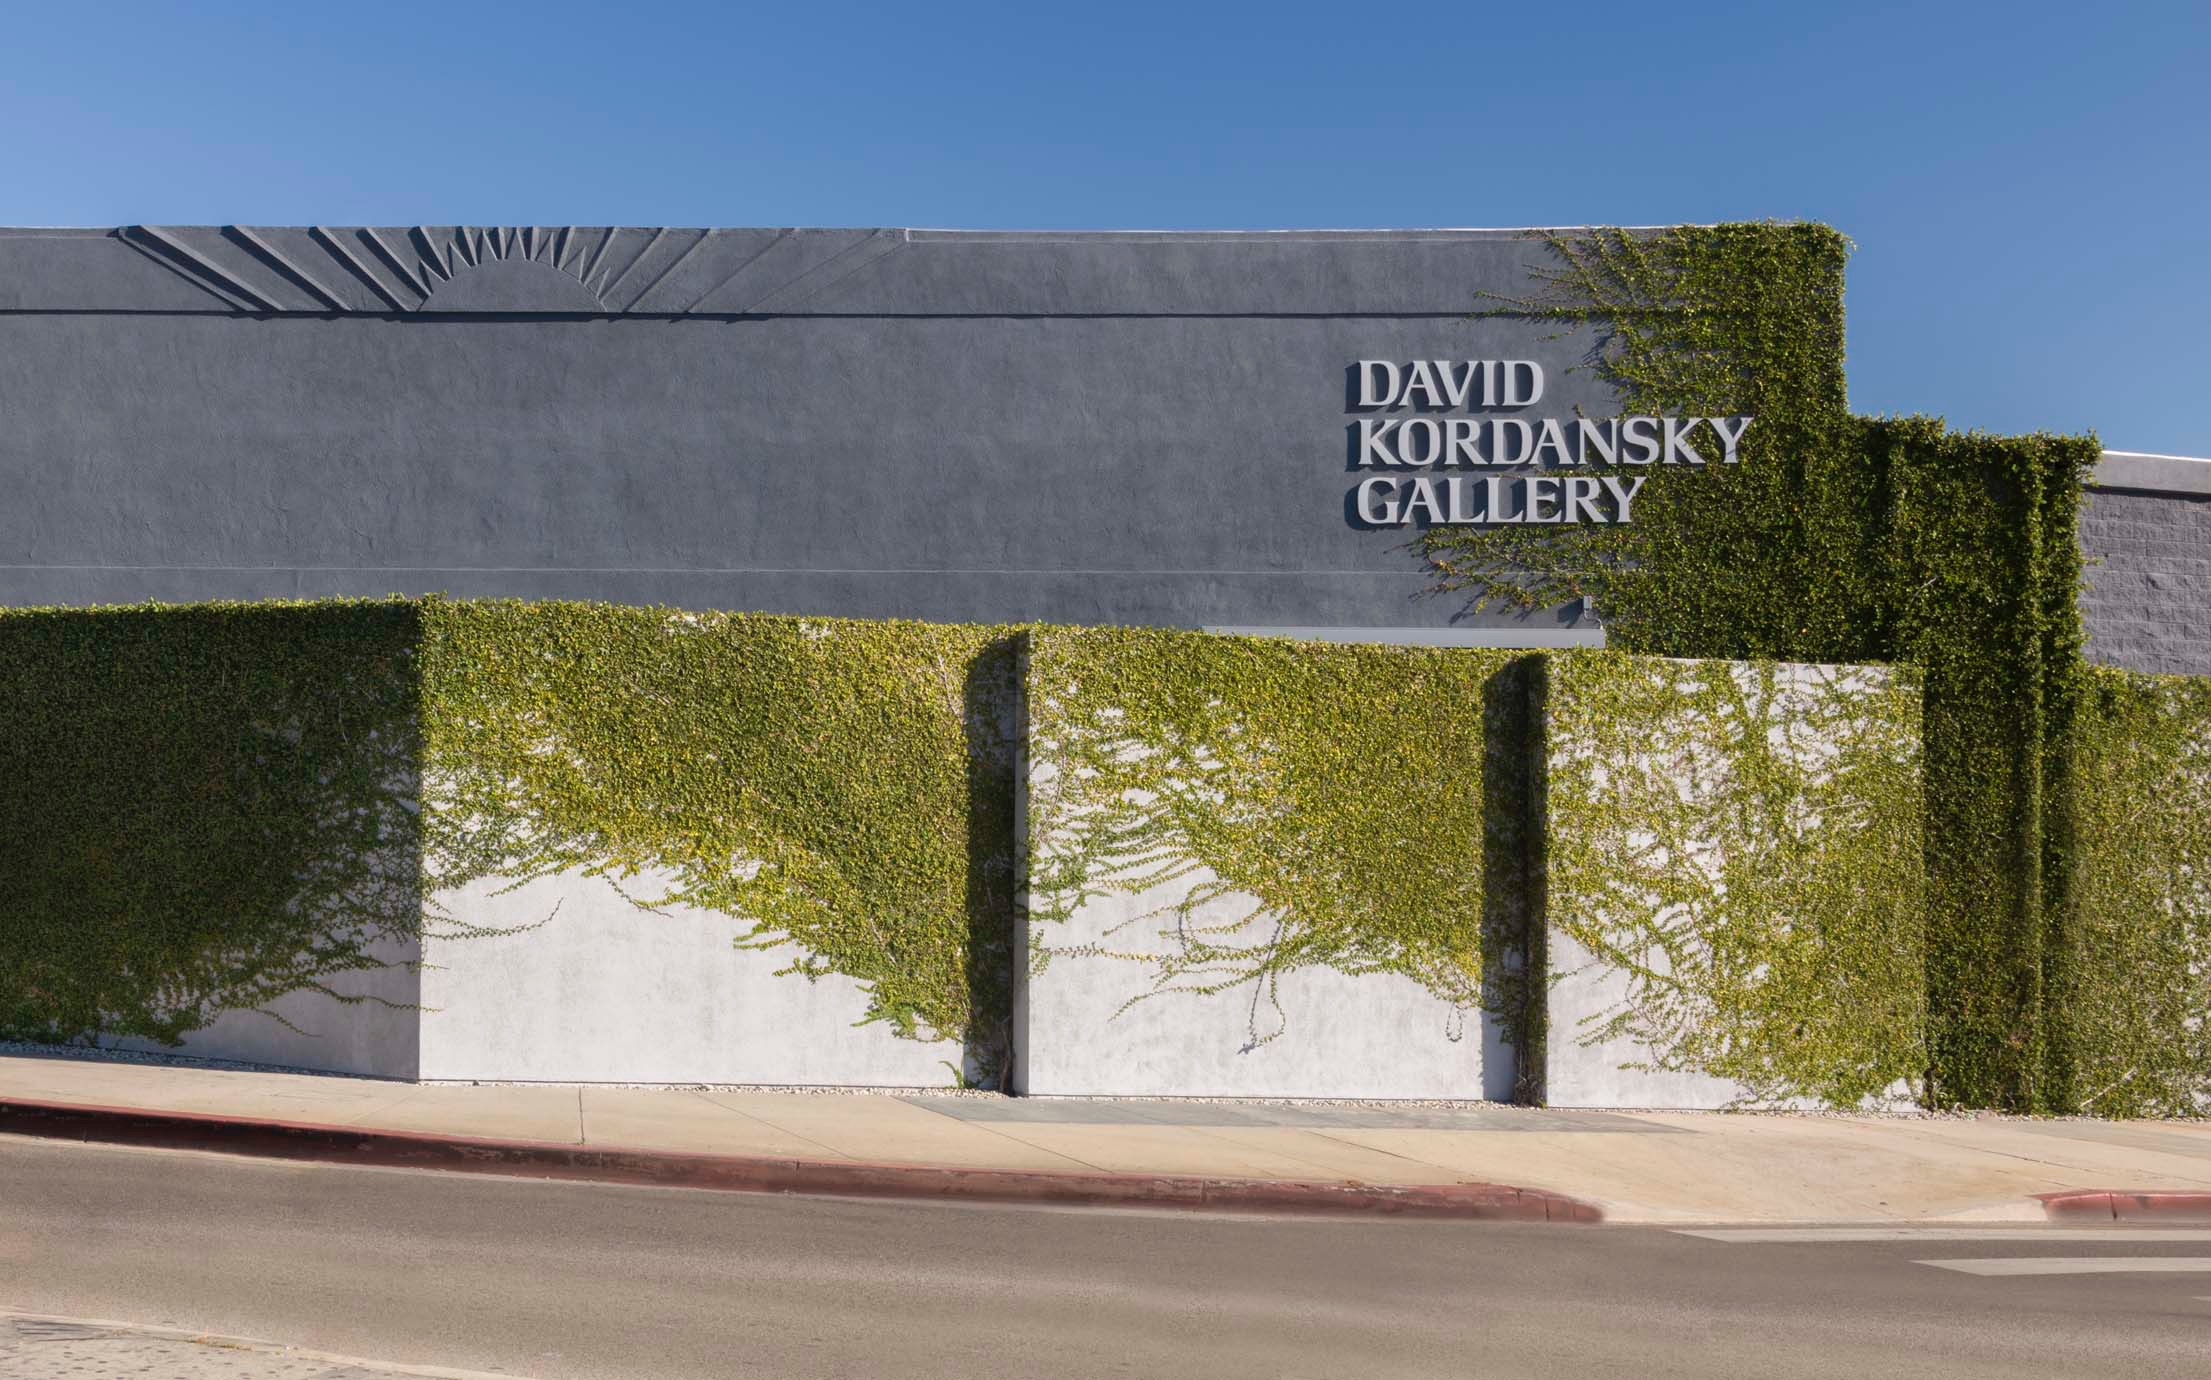 David Kordansky Gallery, Mid-City Los Angeles.